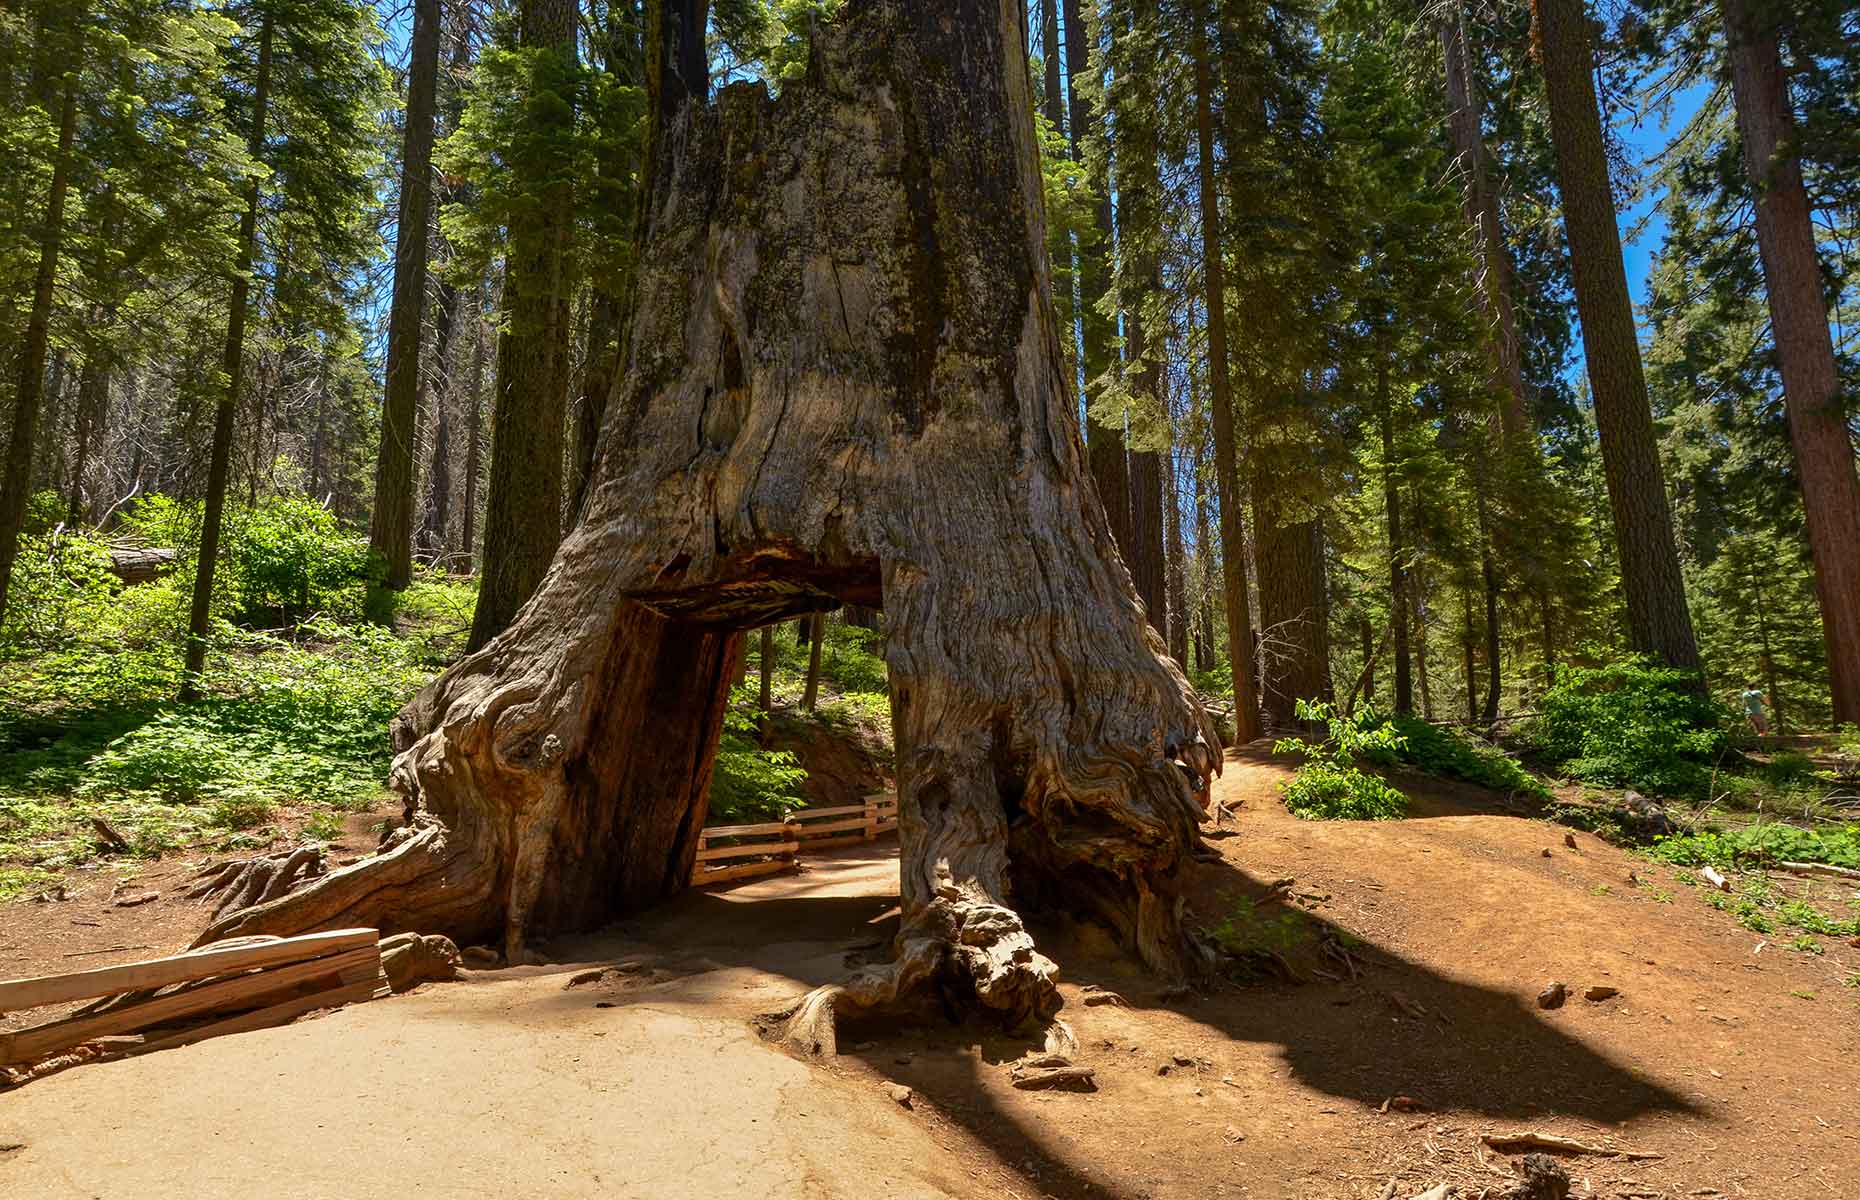 Dead Giant sequoia, Tuolumne county (Image: Serj Malomuzh/Shutterstock